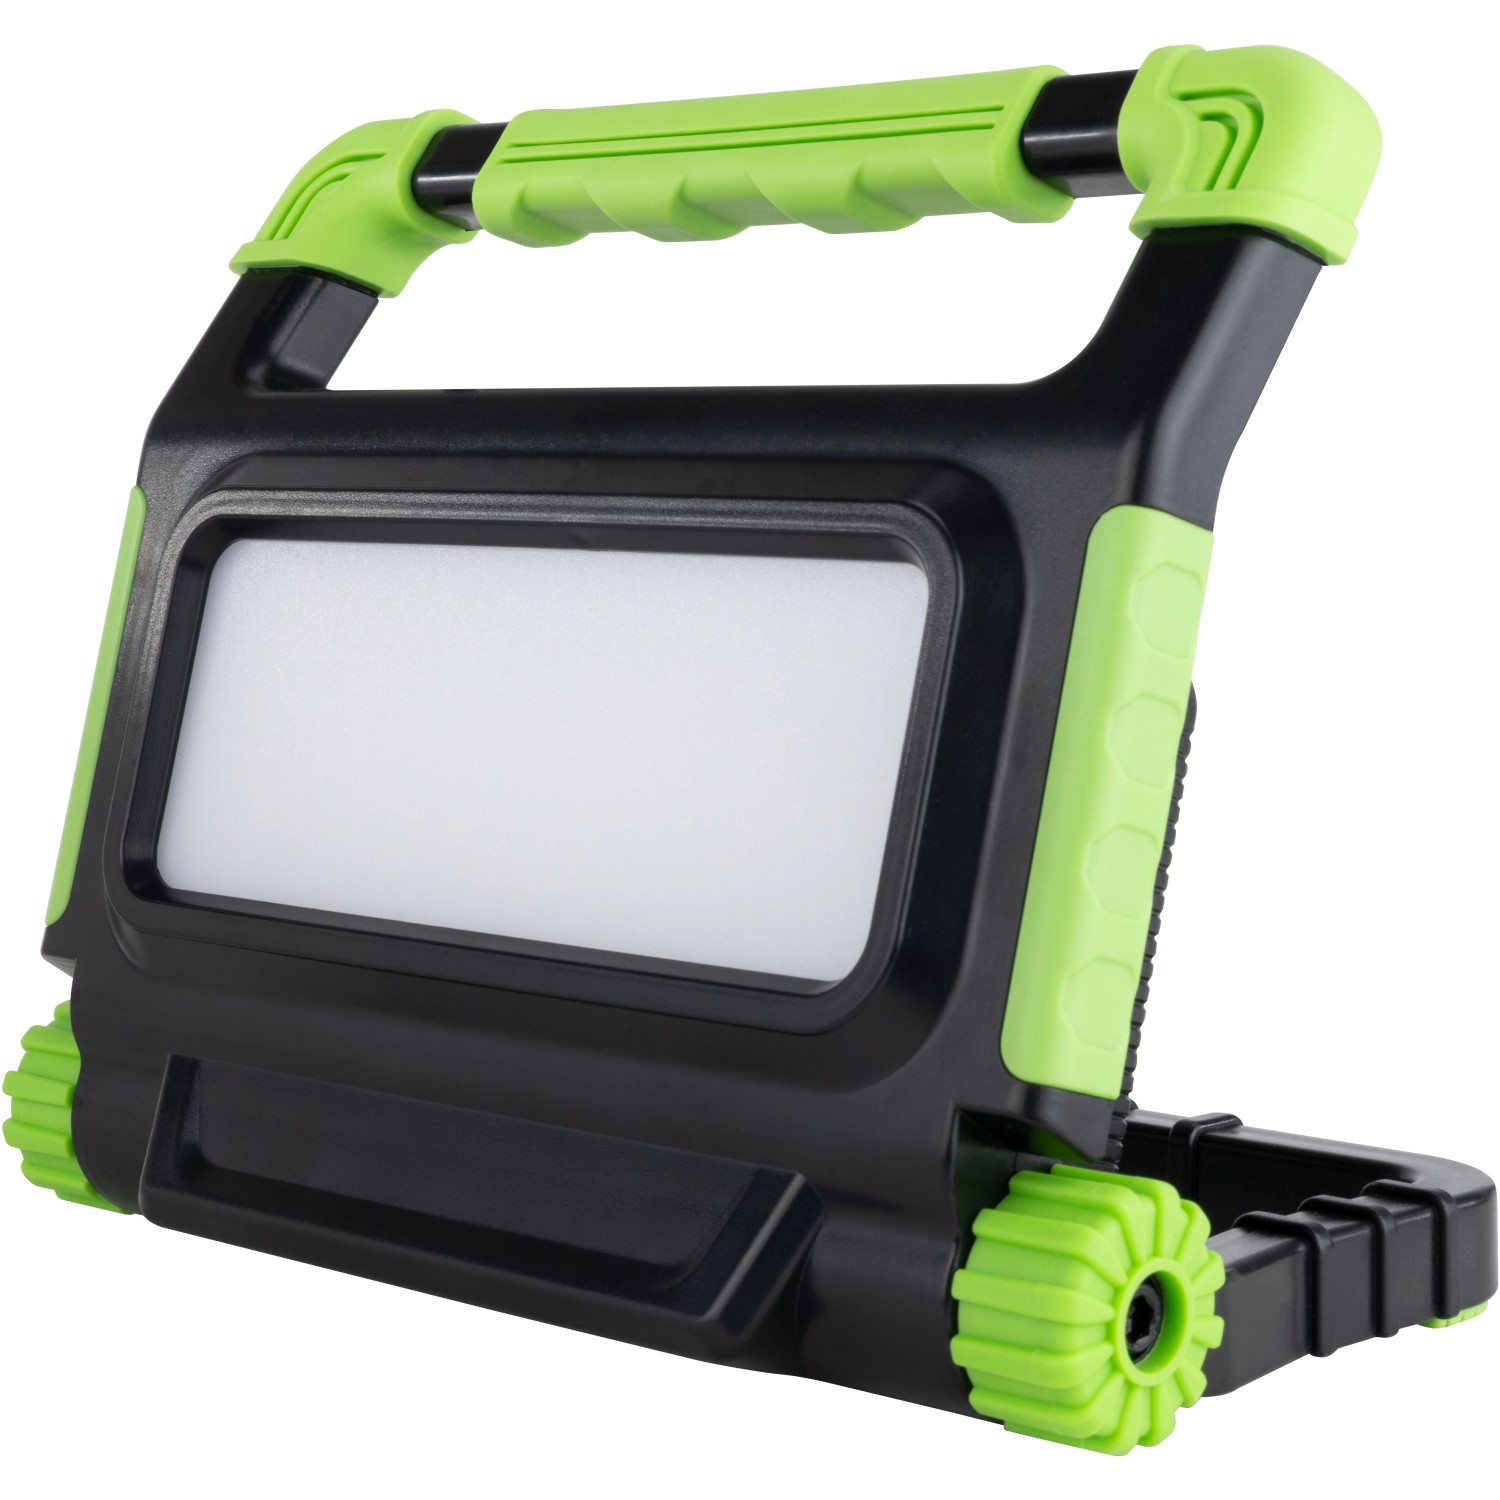 Warnblinkleuchte grün, Notfallleuchte LED mit Ladegerät, Akku